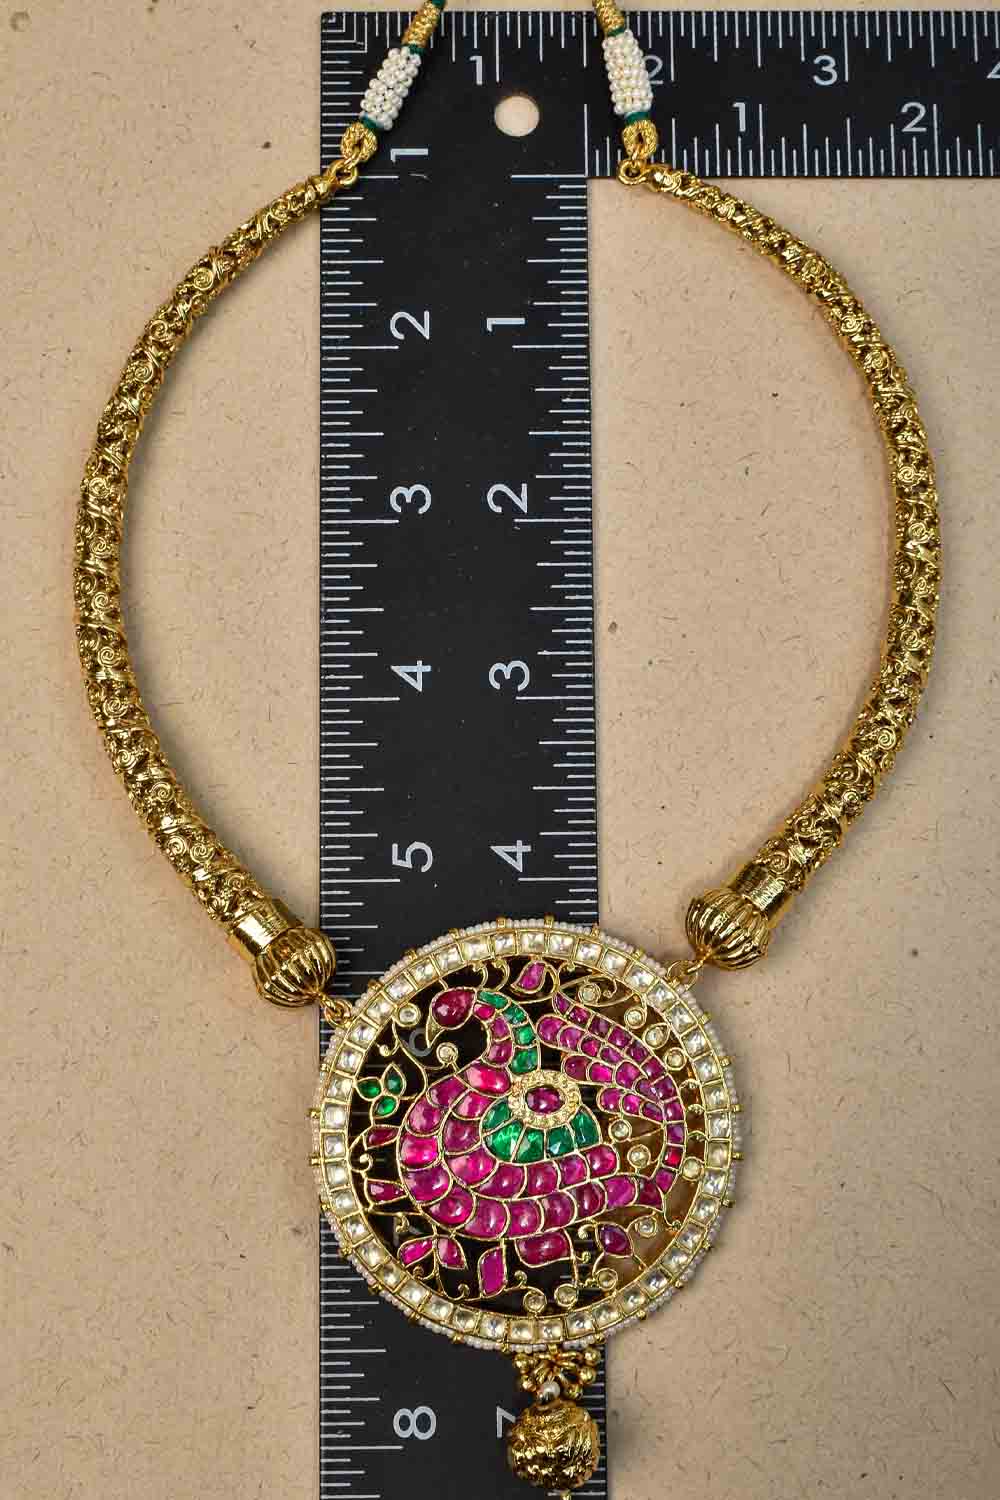 Distinct gold tone hasli with Prominent Kemp Peacock in Mandala Pendant Necklace Set